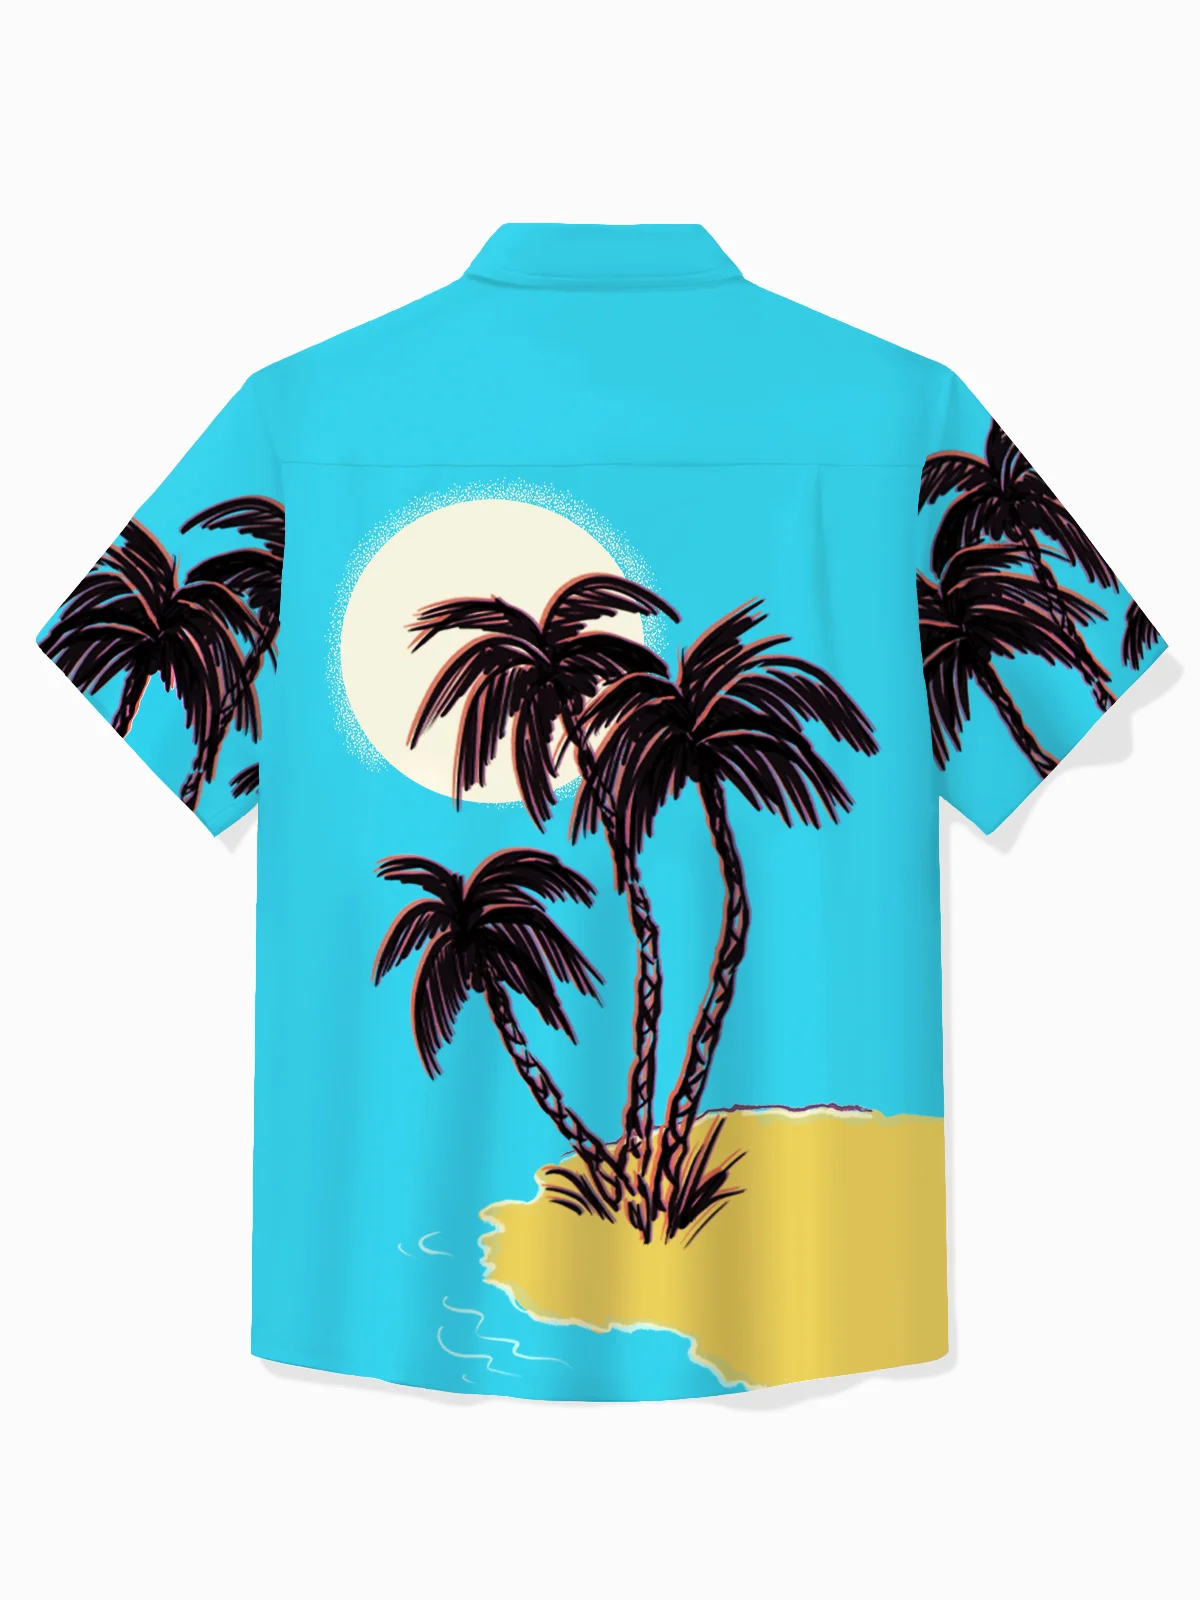 Royaura® x 50s Vintage Dame Beach Vacation Men's Hawaiian Shirt Coconut Tree Hula Girl Print Stretch Pocket Camping Shirt Big Tall